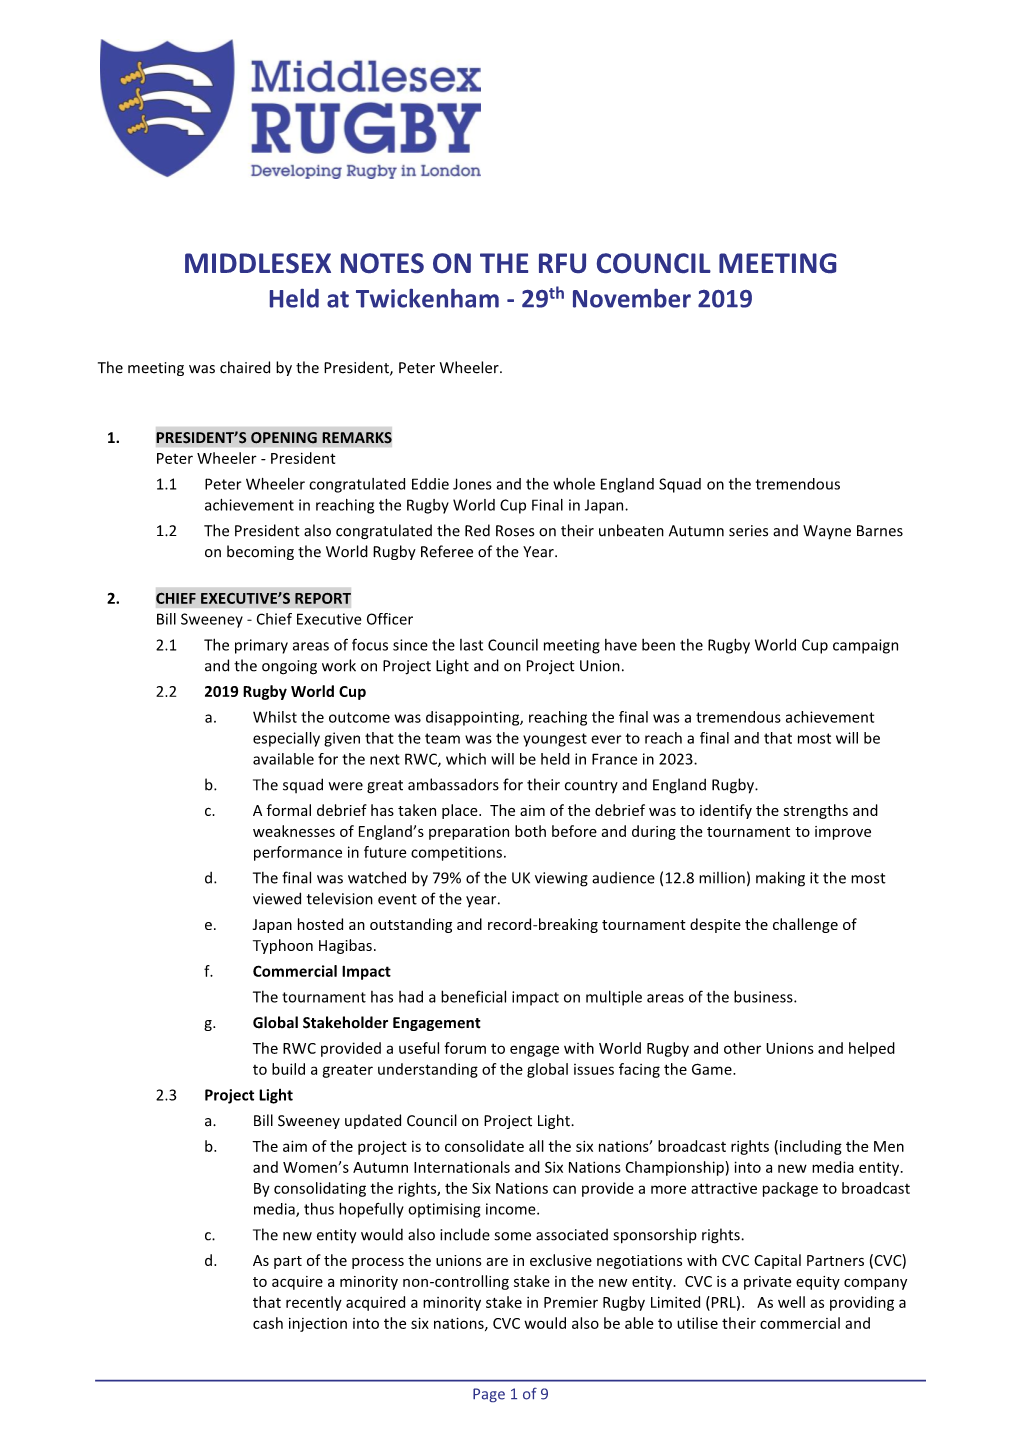 NOTES on the RFU COUNCIL MEETING Held at Twickenham - 29Th November 2019